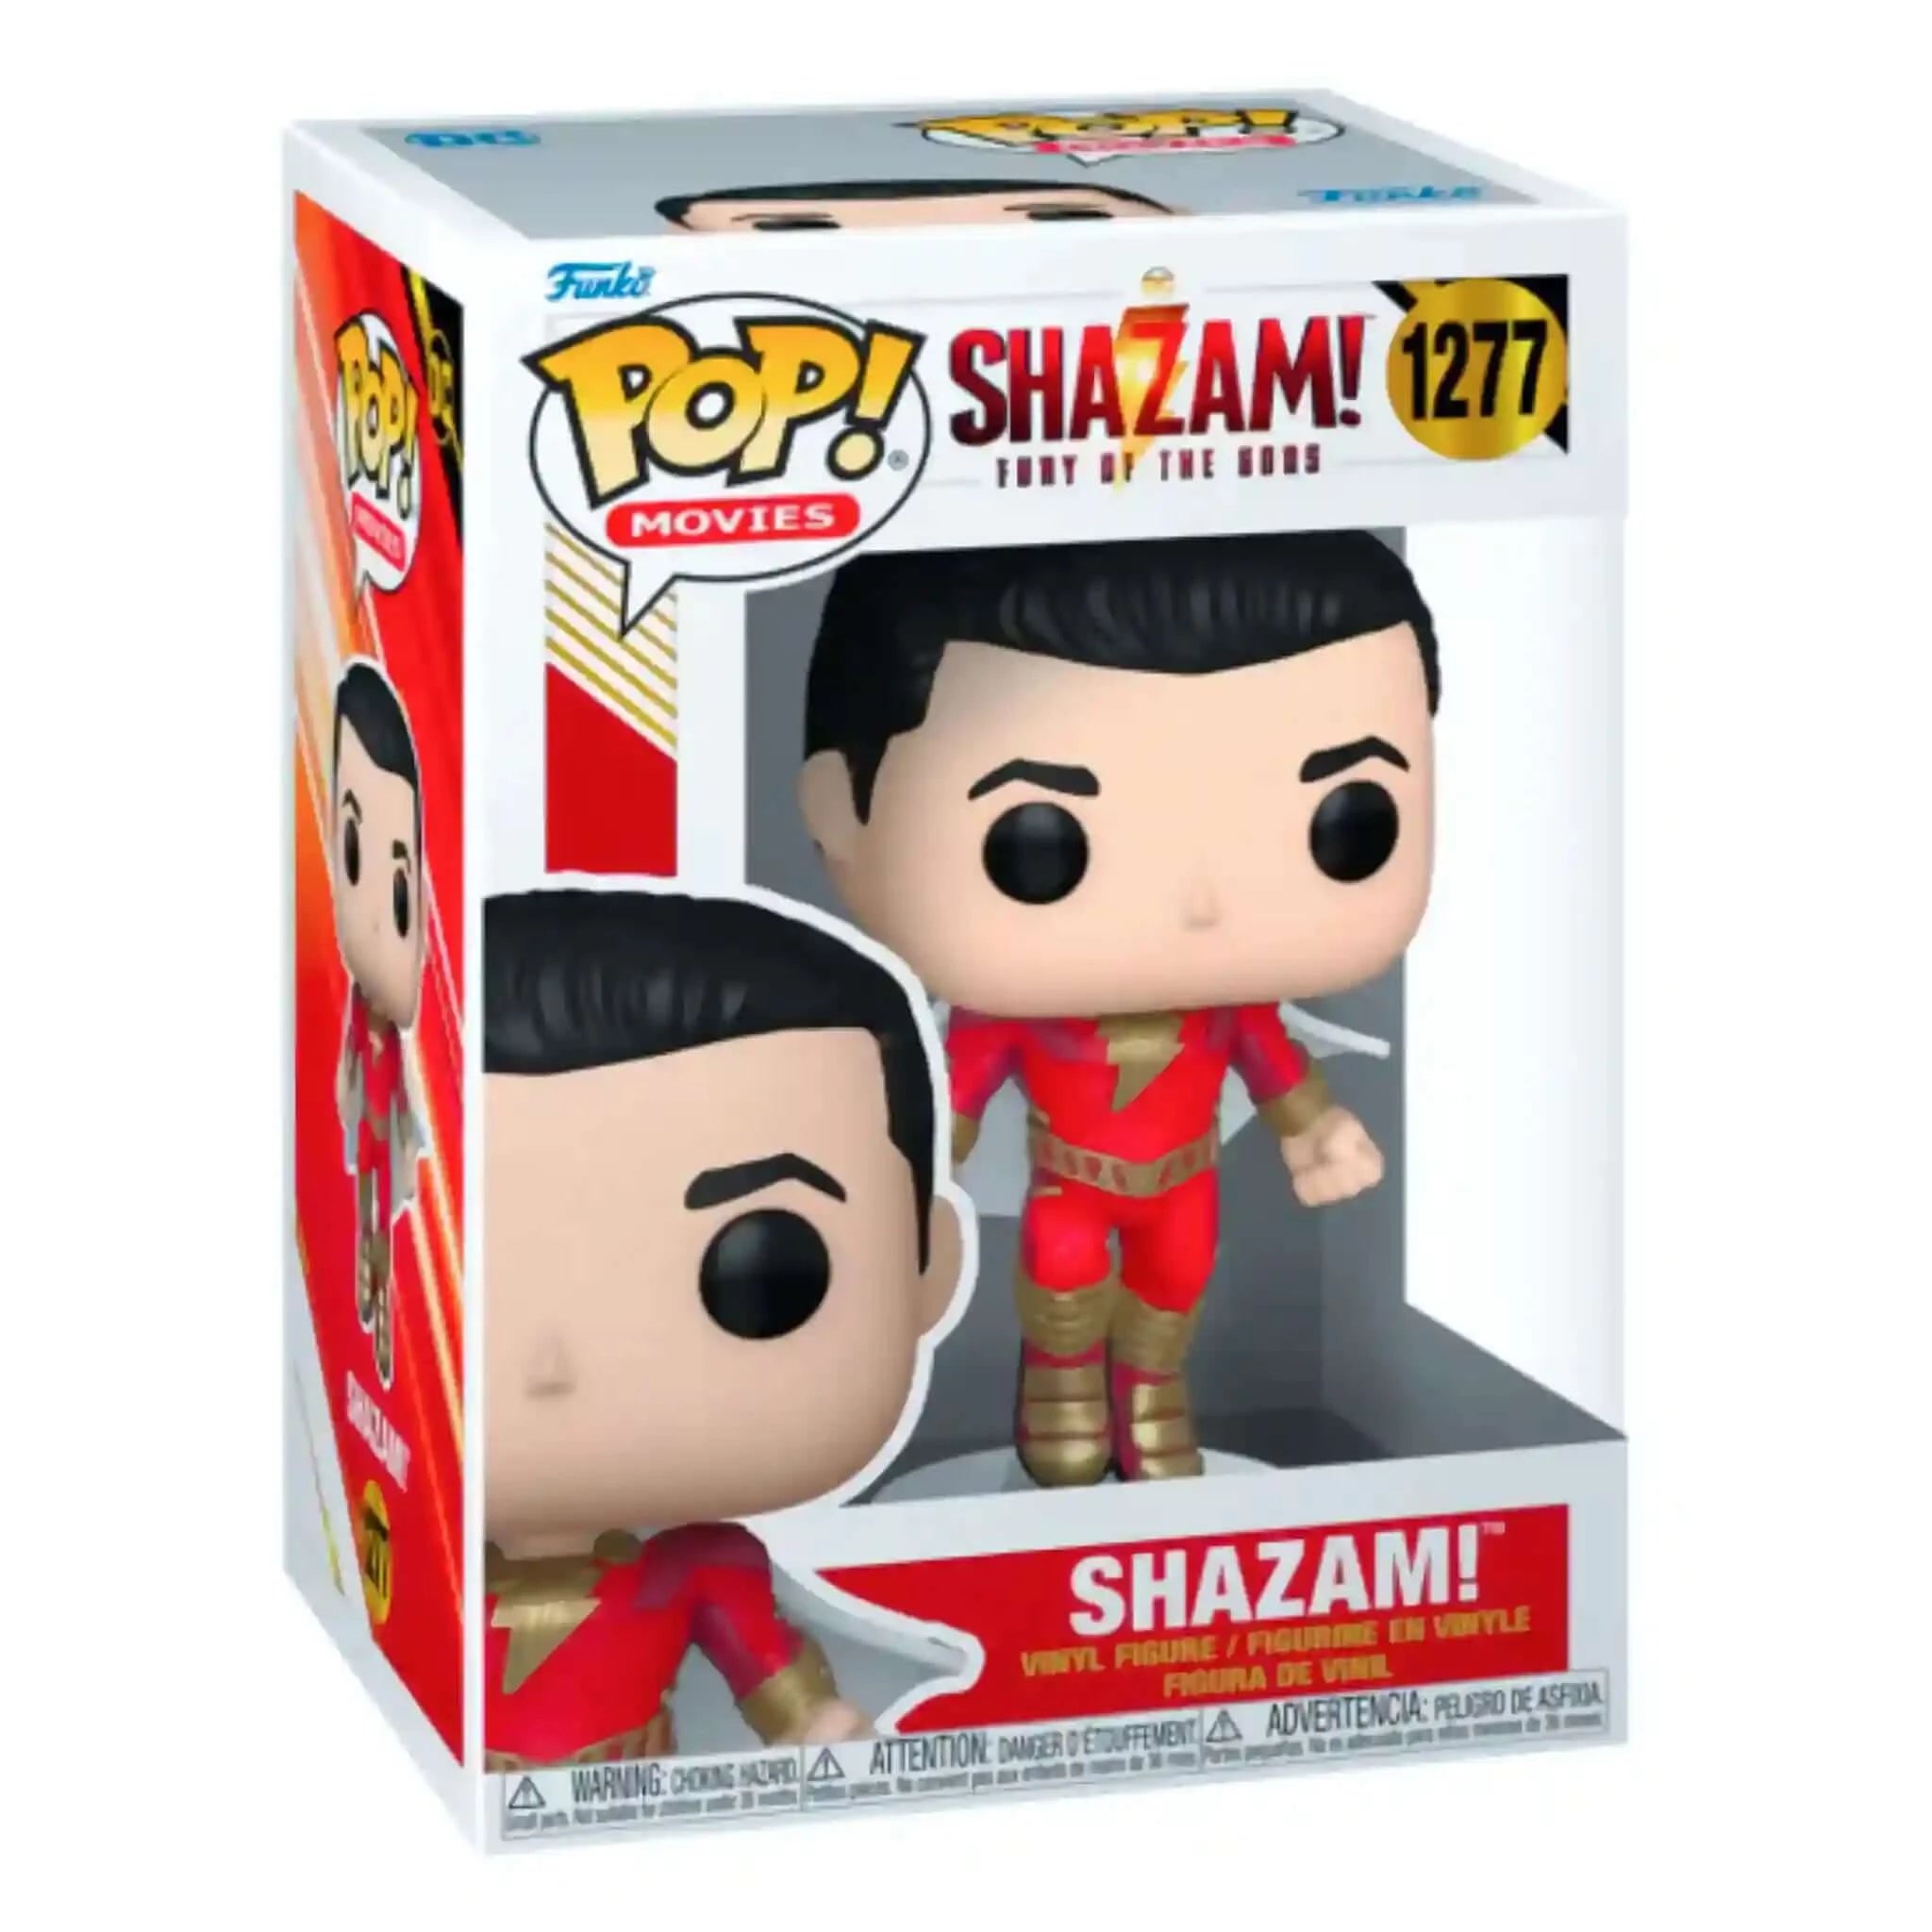 Shazam! Funko Pop!-Jingle Truck Toys